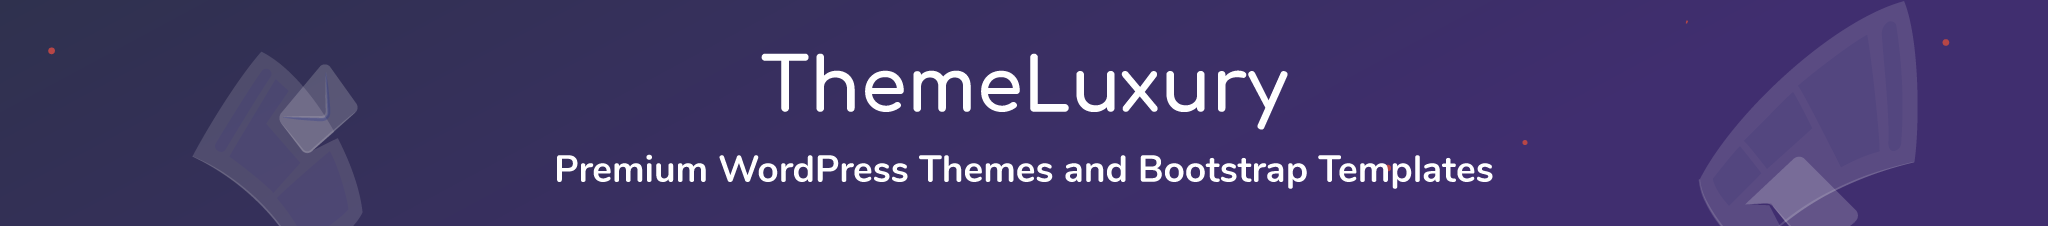 Theme Luxury's profile banner